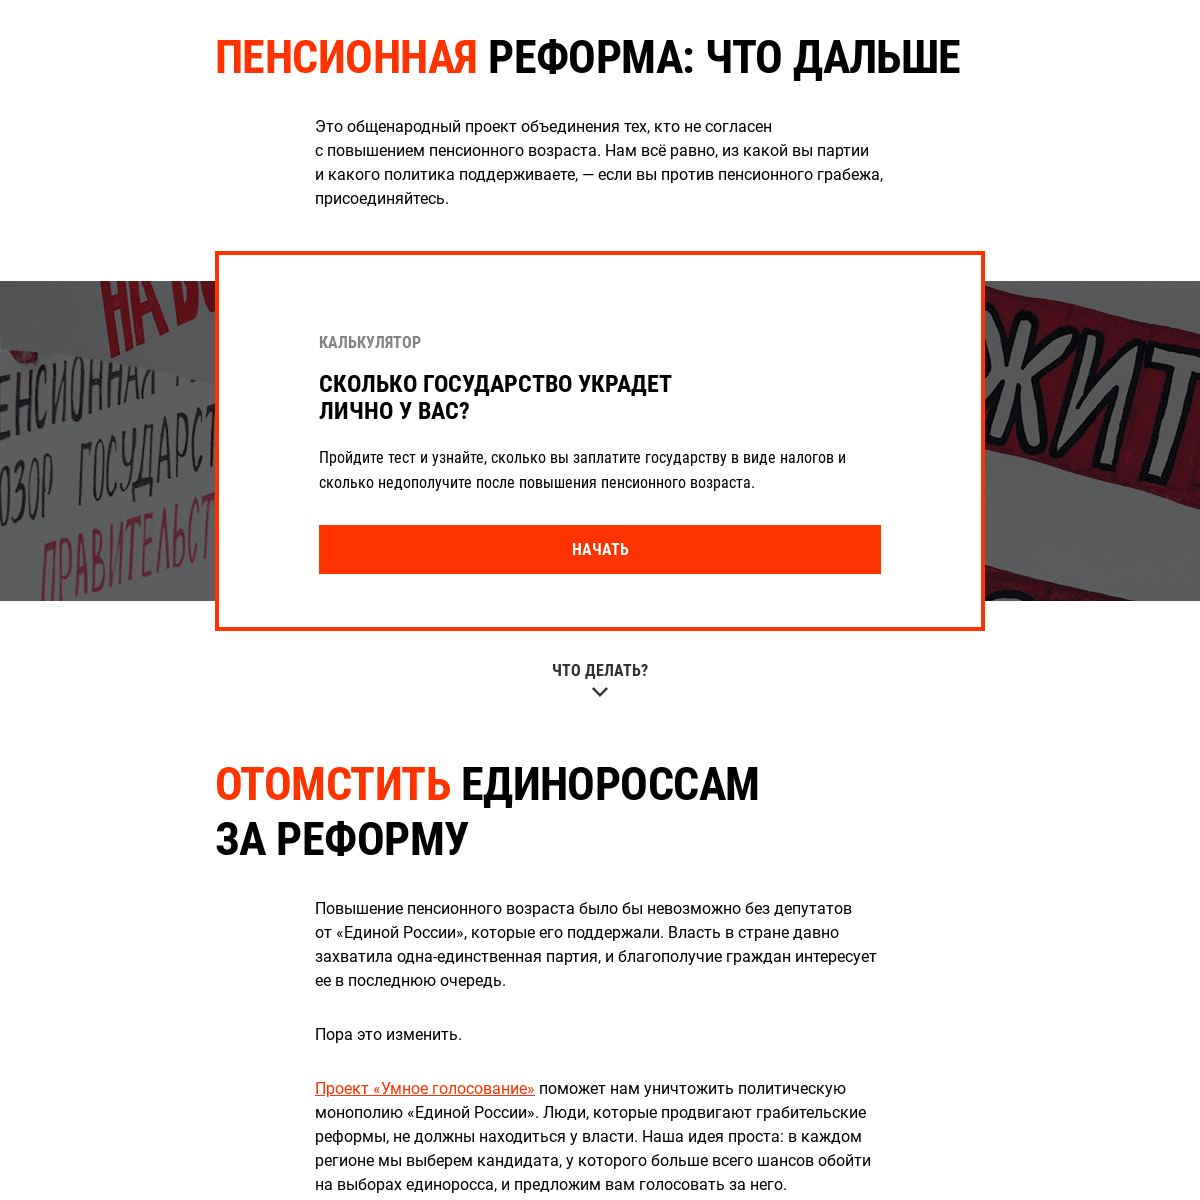 A complete backup of pensiya.org